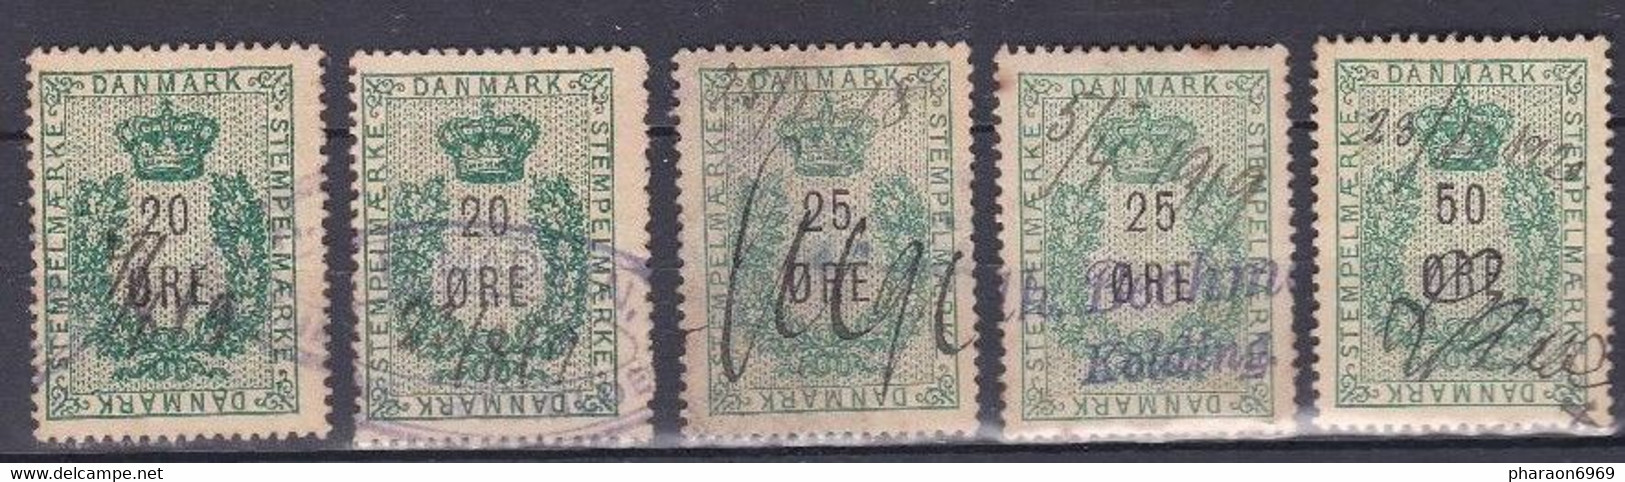 Stempelmarke - Revenue Stamps